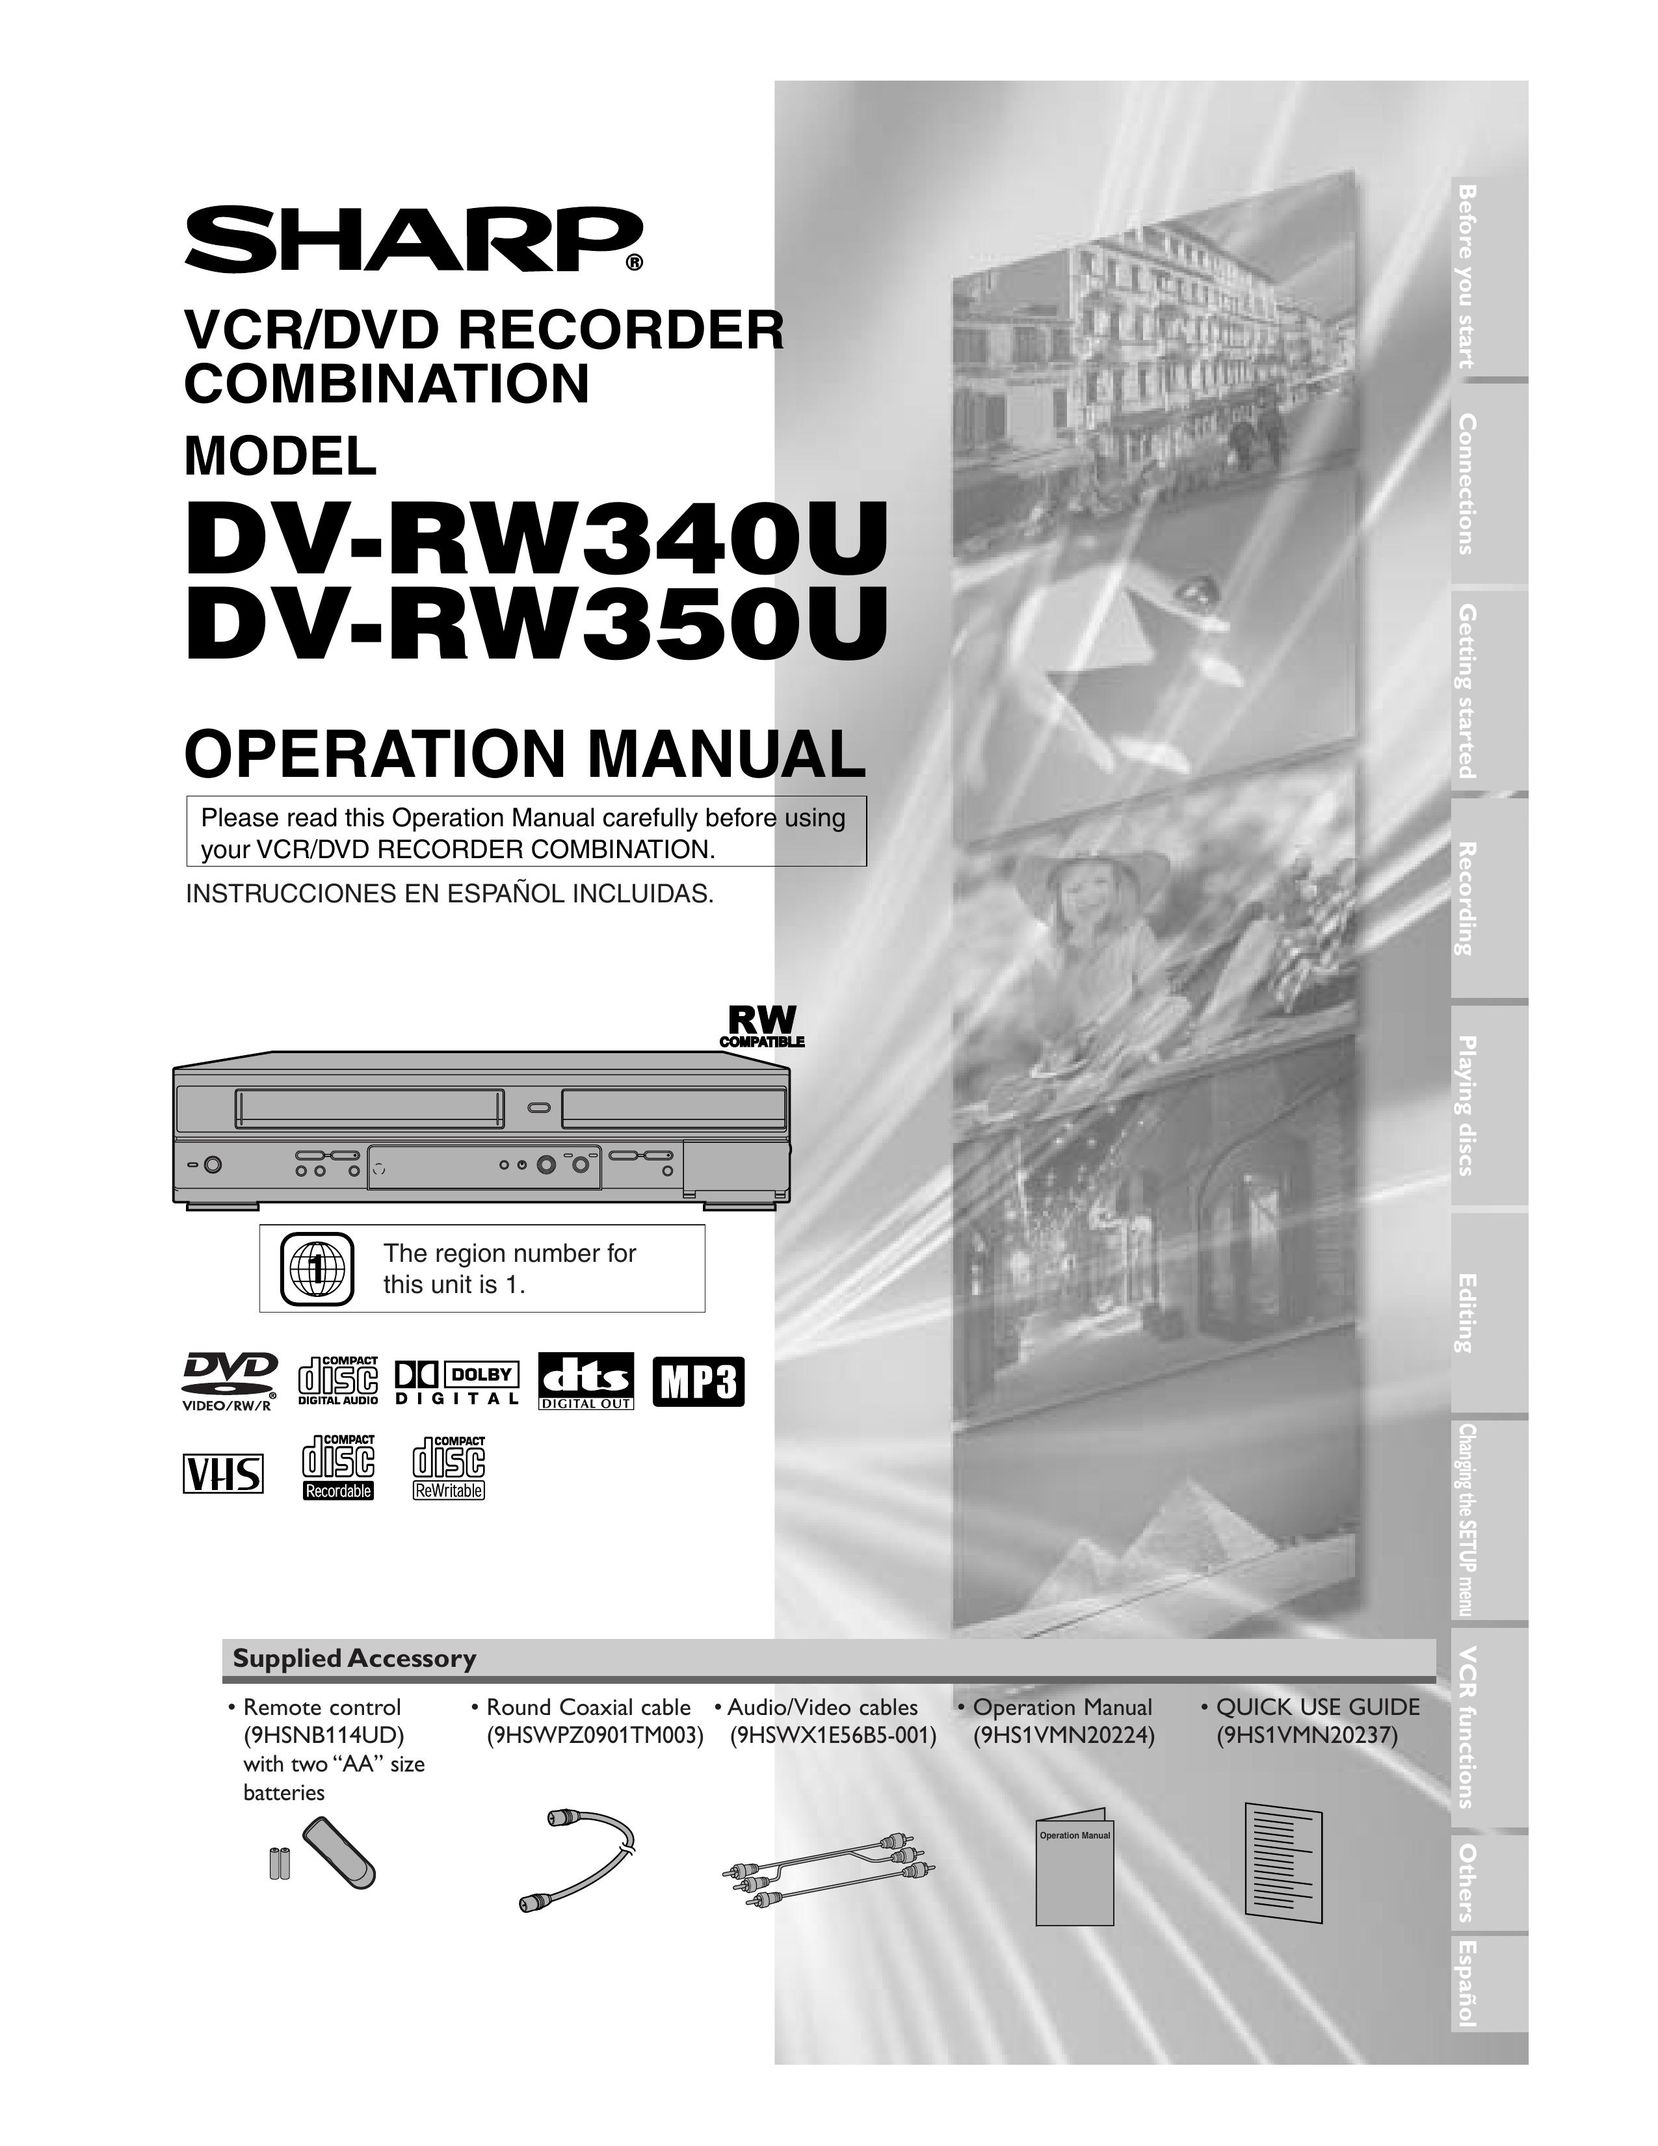 Sharp DV-RW340U DVD VCR Combo User Manual